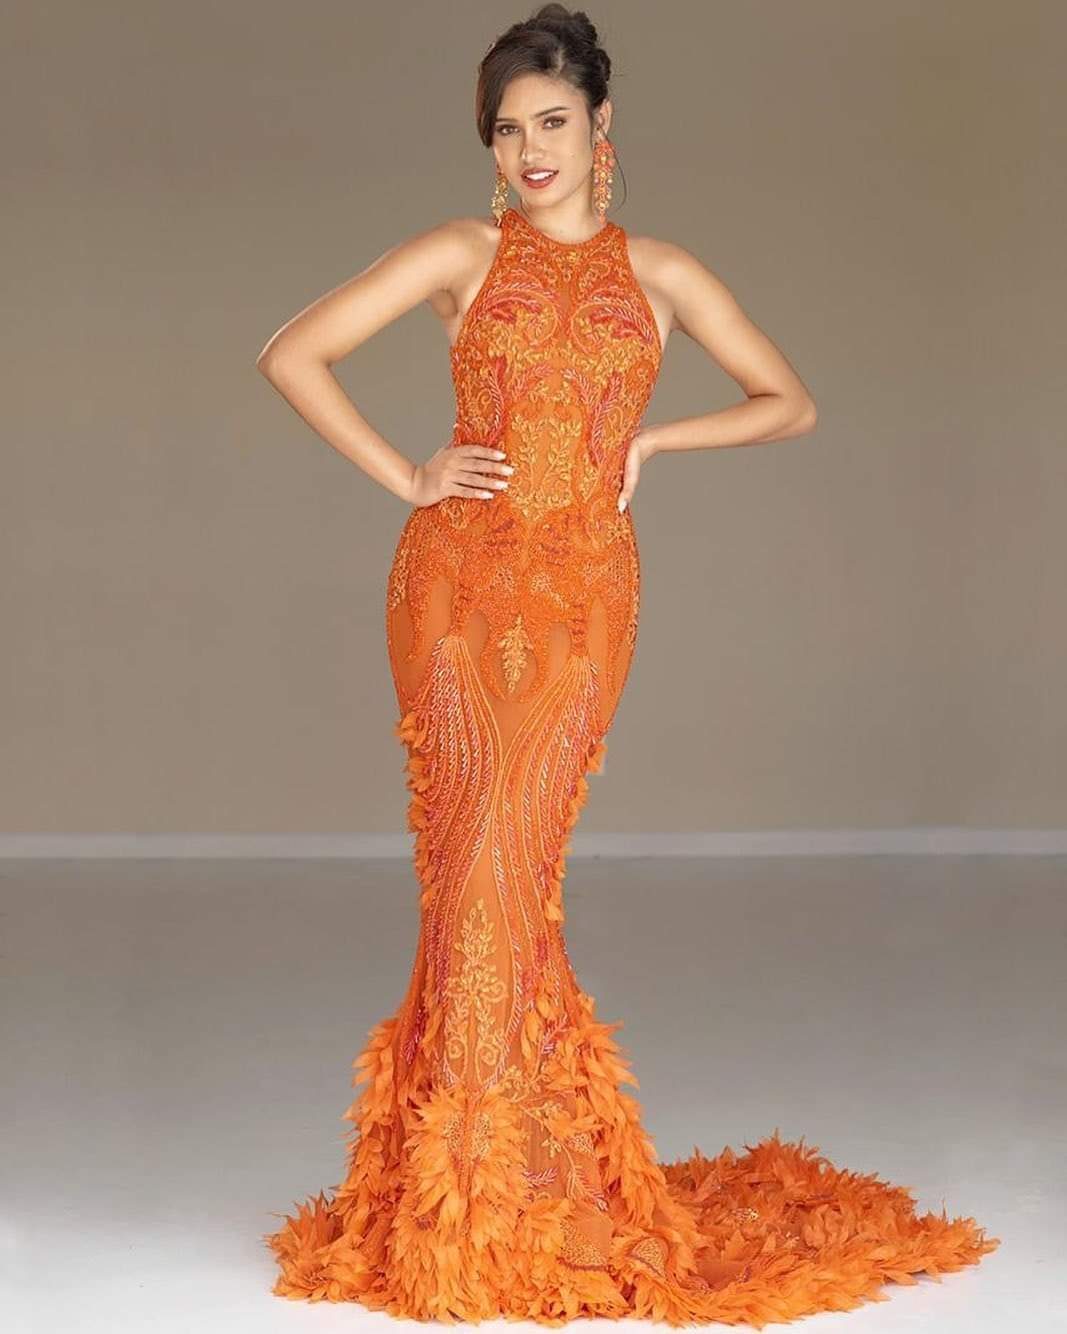 LOOK: Rabiya Mateo’s Sarimanok-inspired gown for Miss Universe 2020